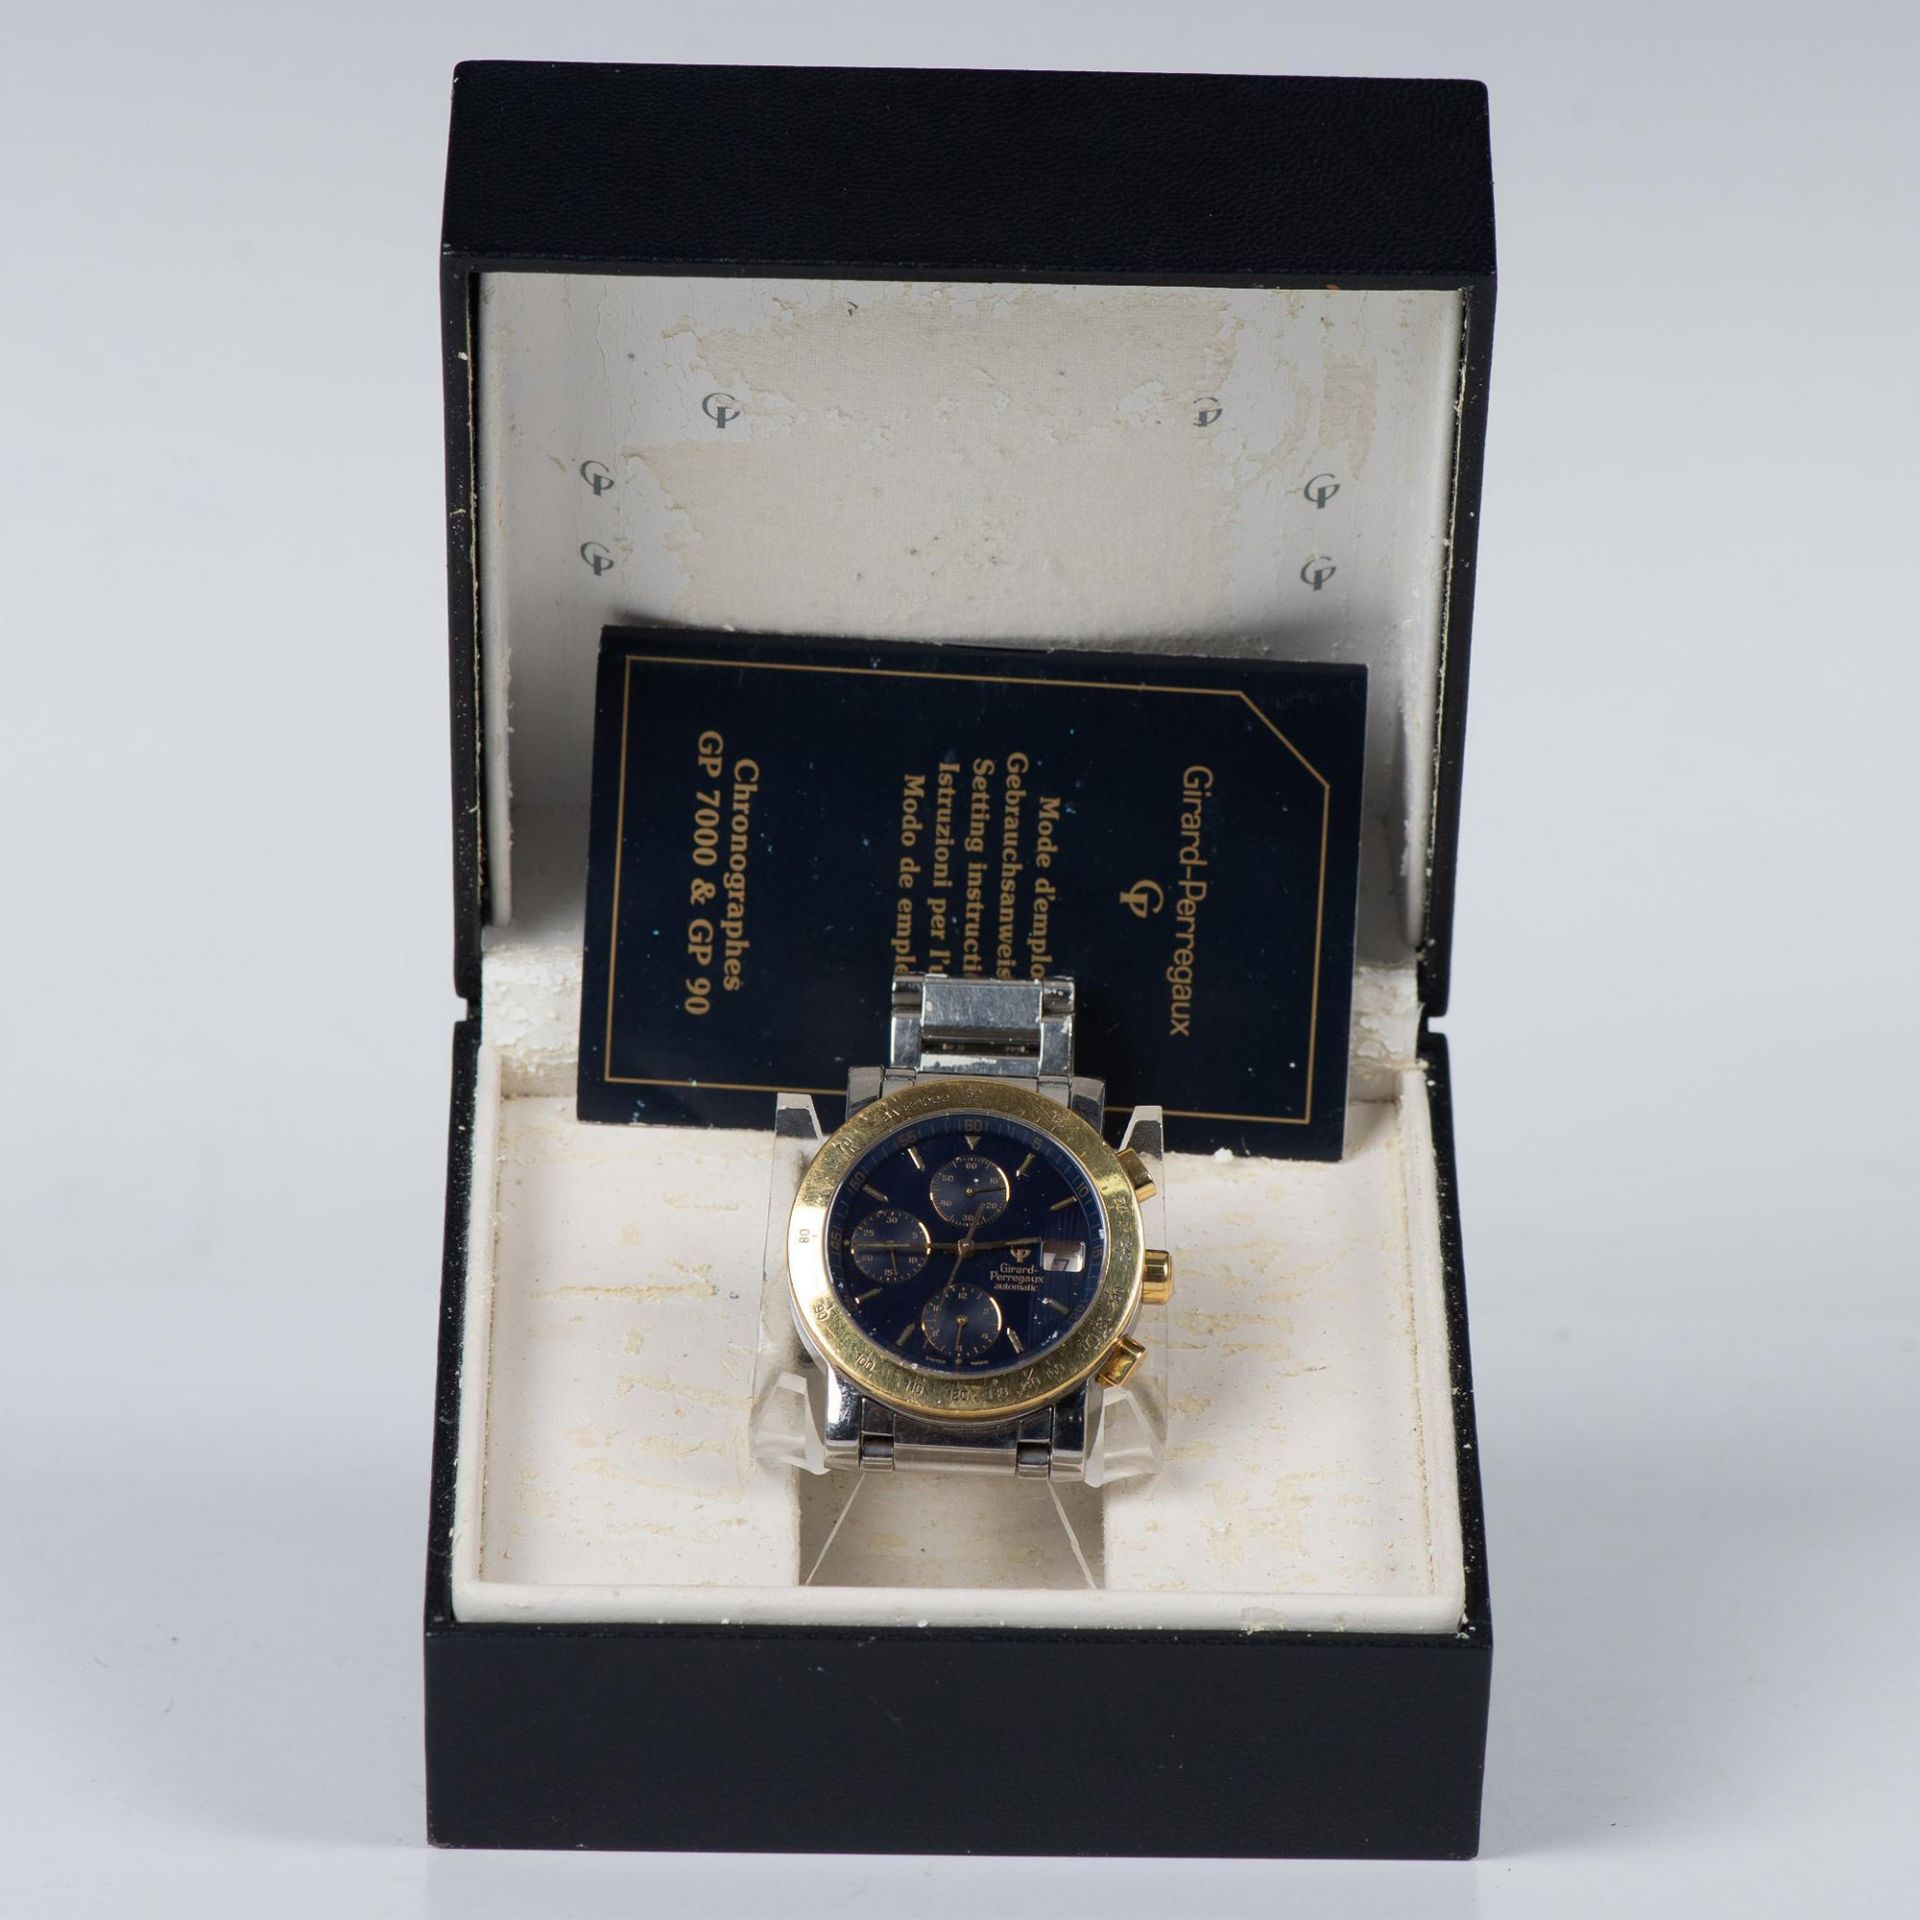 Girard Perregaux 7000 Chrono Automatic Men's Watch - Image 2 of 11